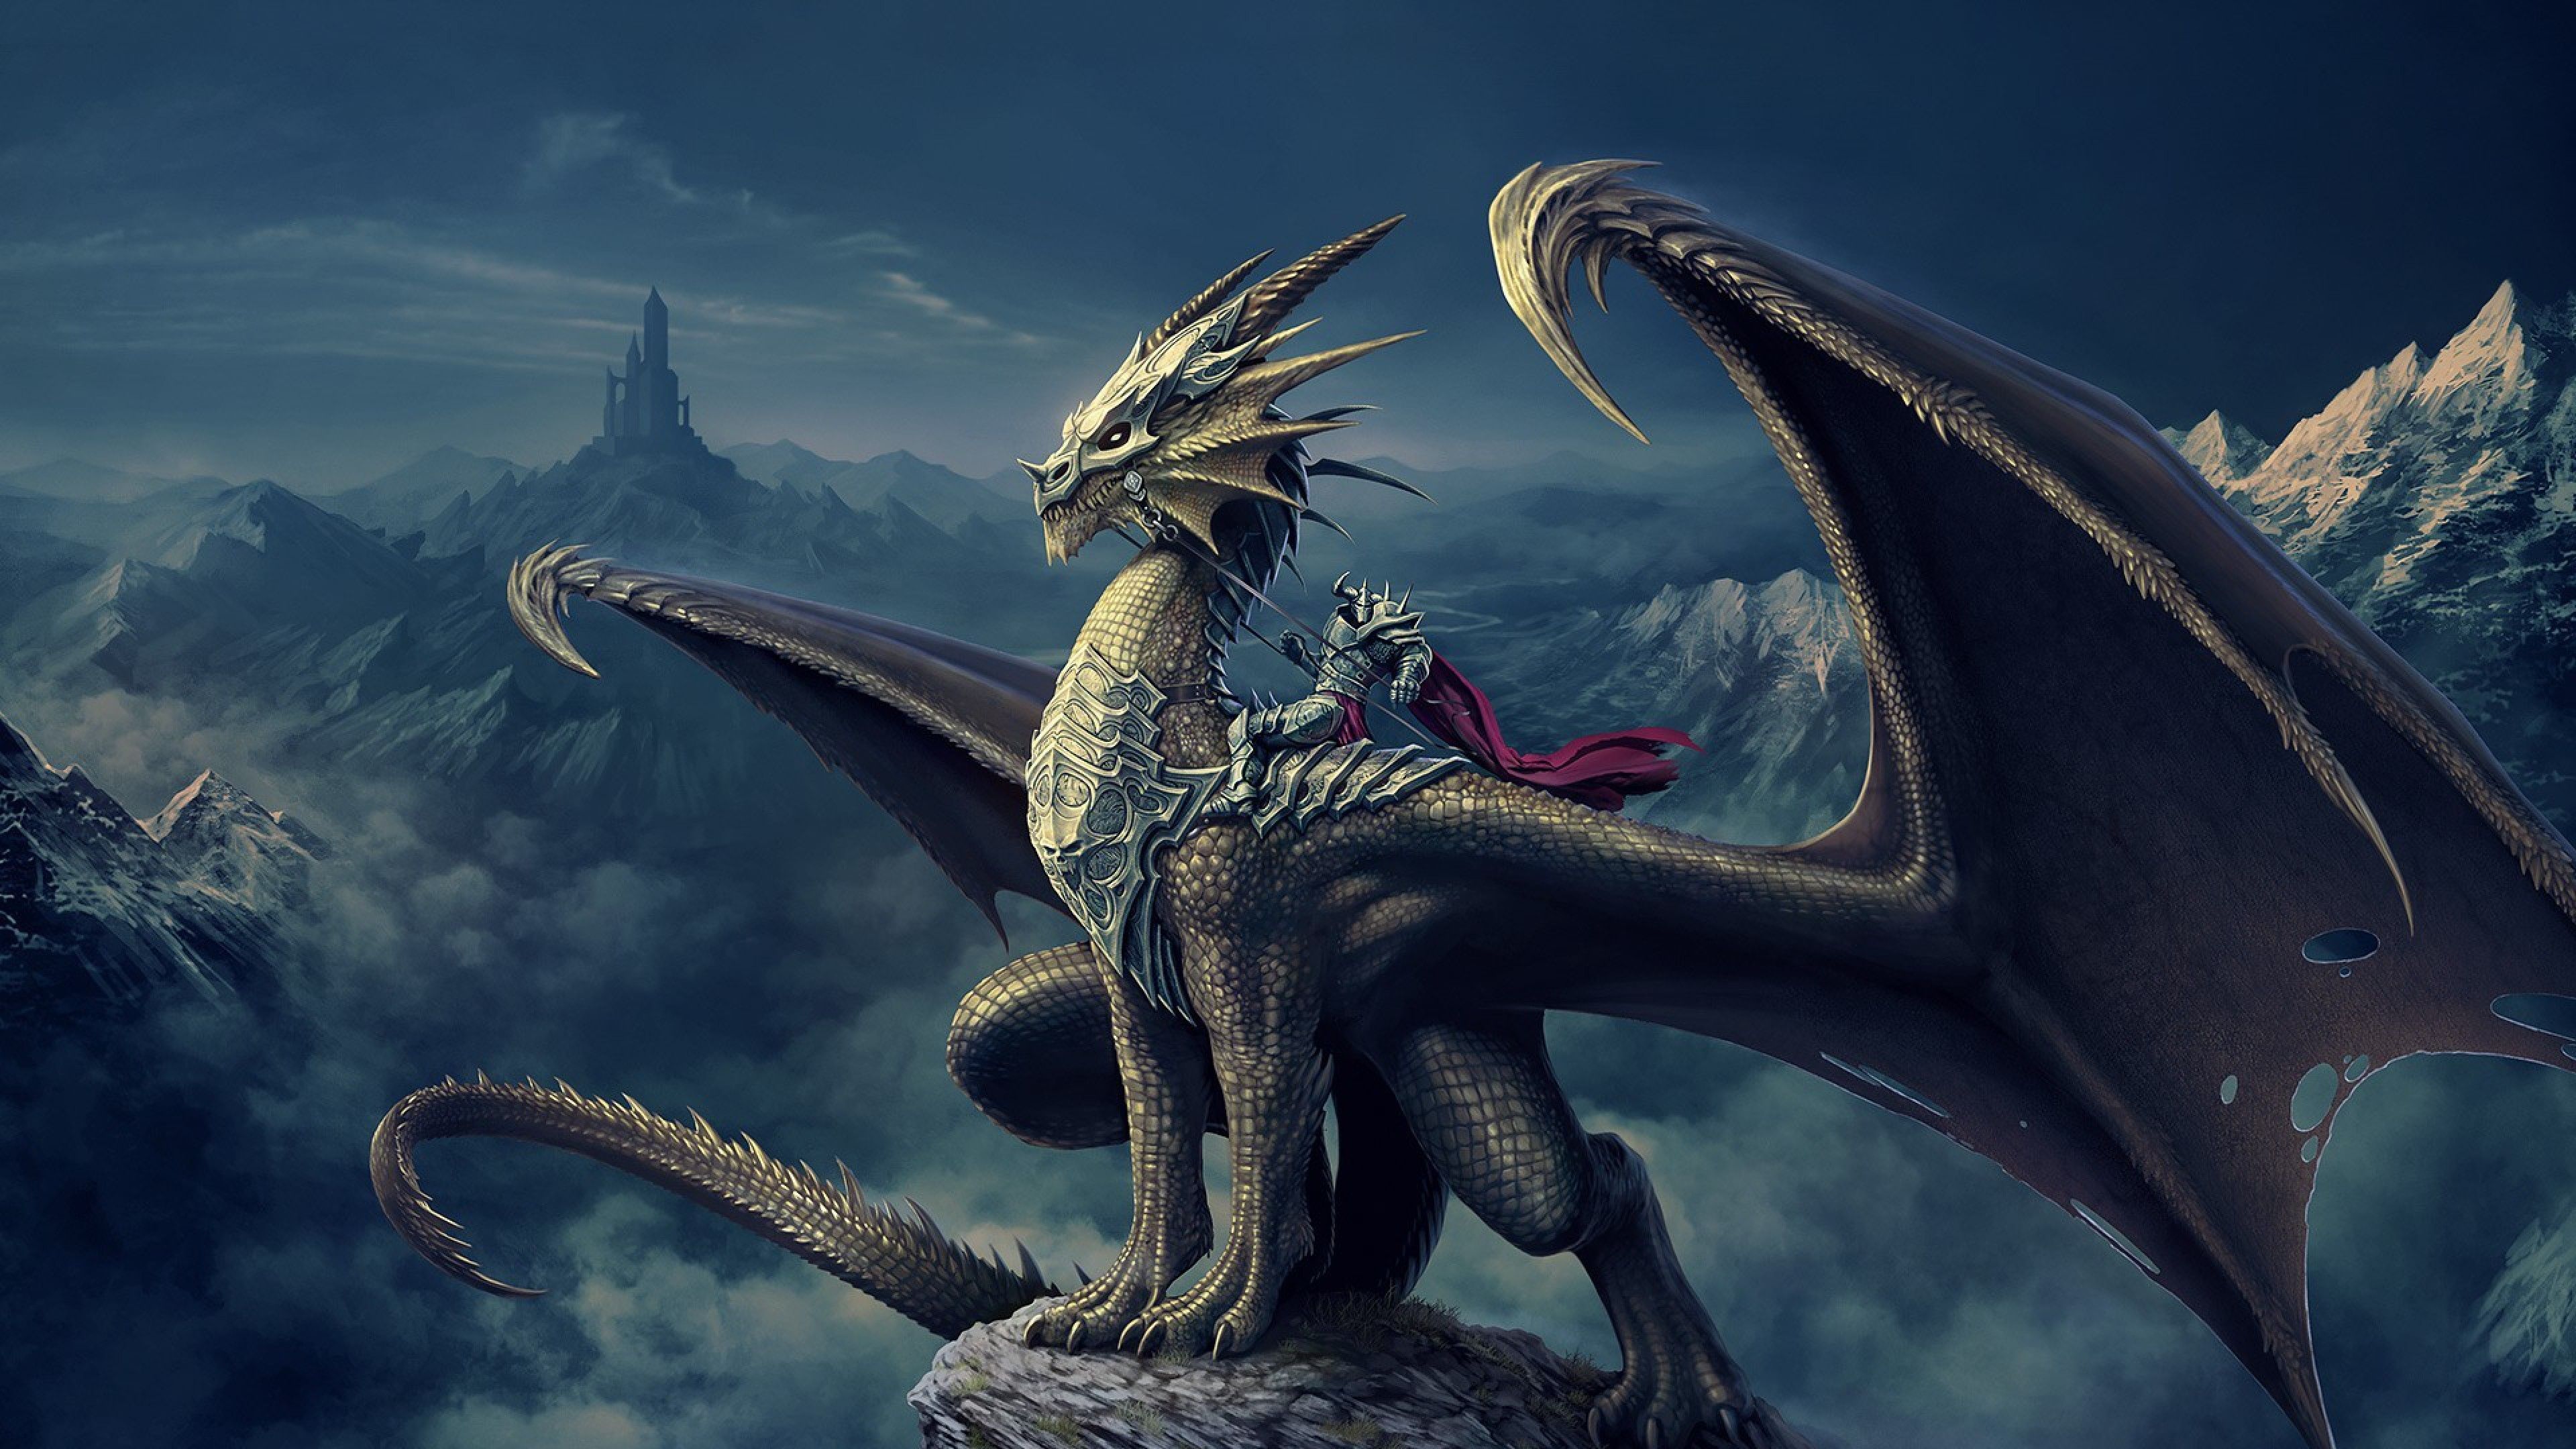 Dragon Artwork 4K
 Wallpapers